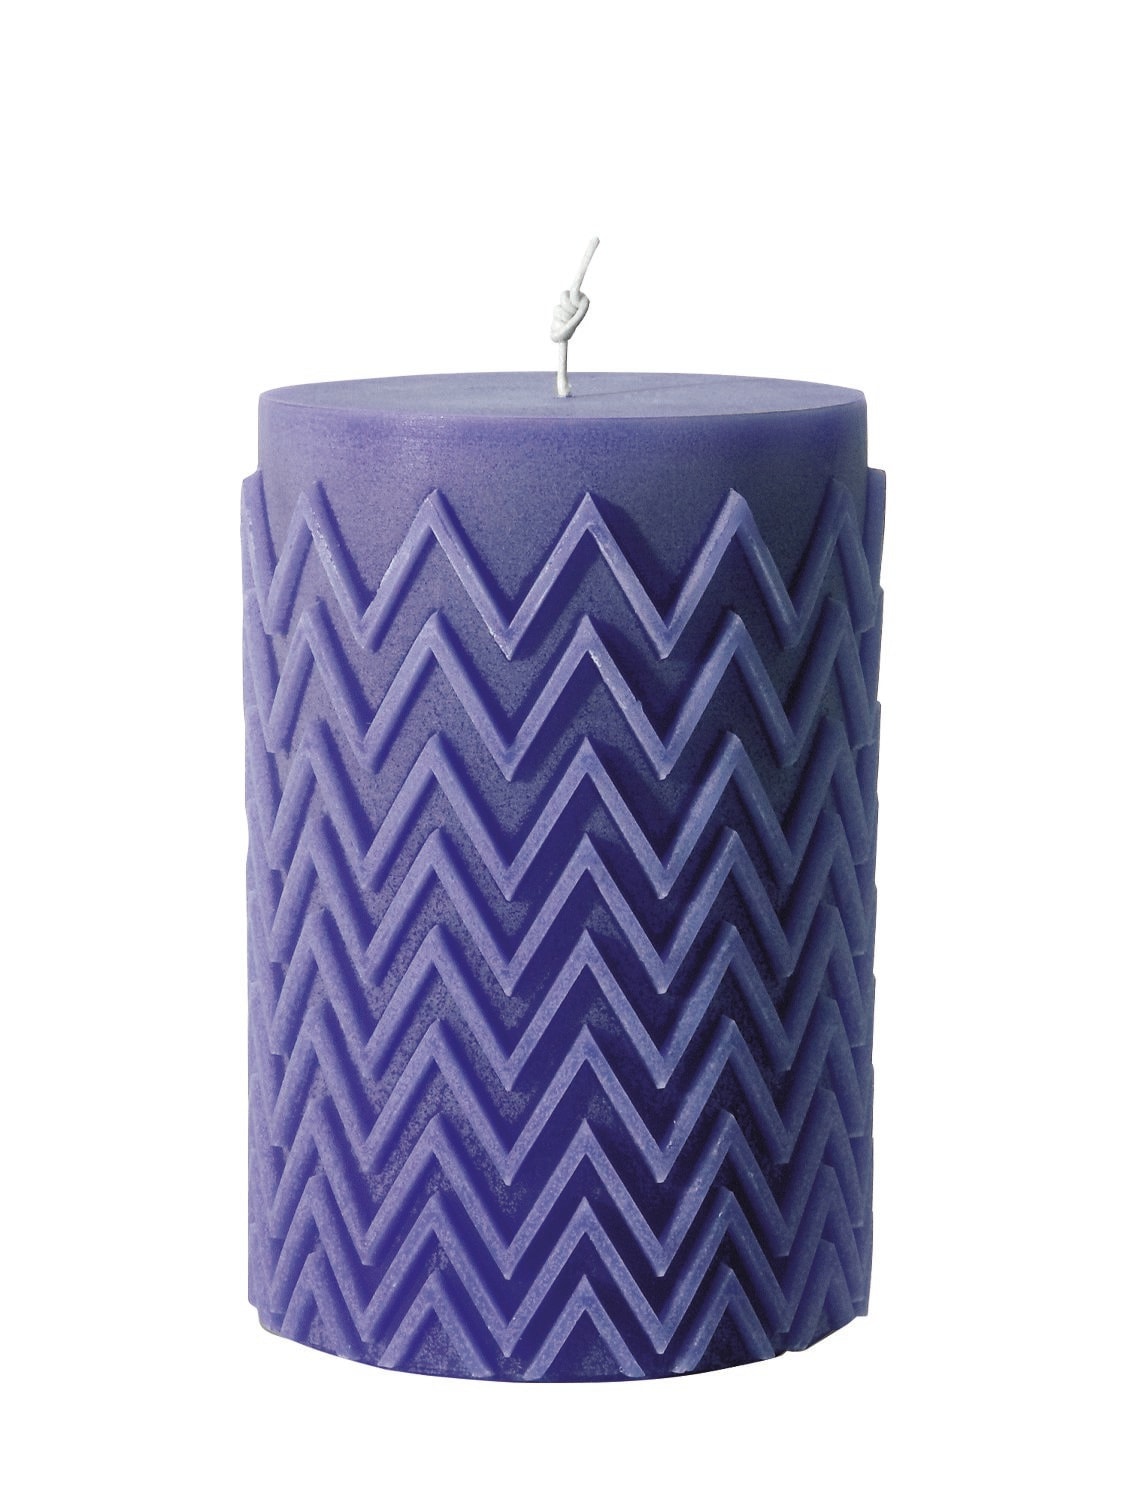 Missoni Home Collection Chevron Candle In Purple